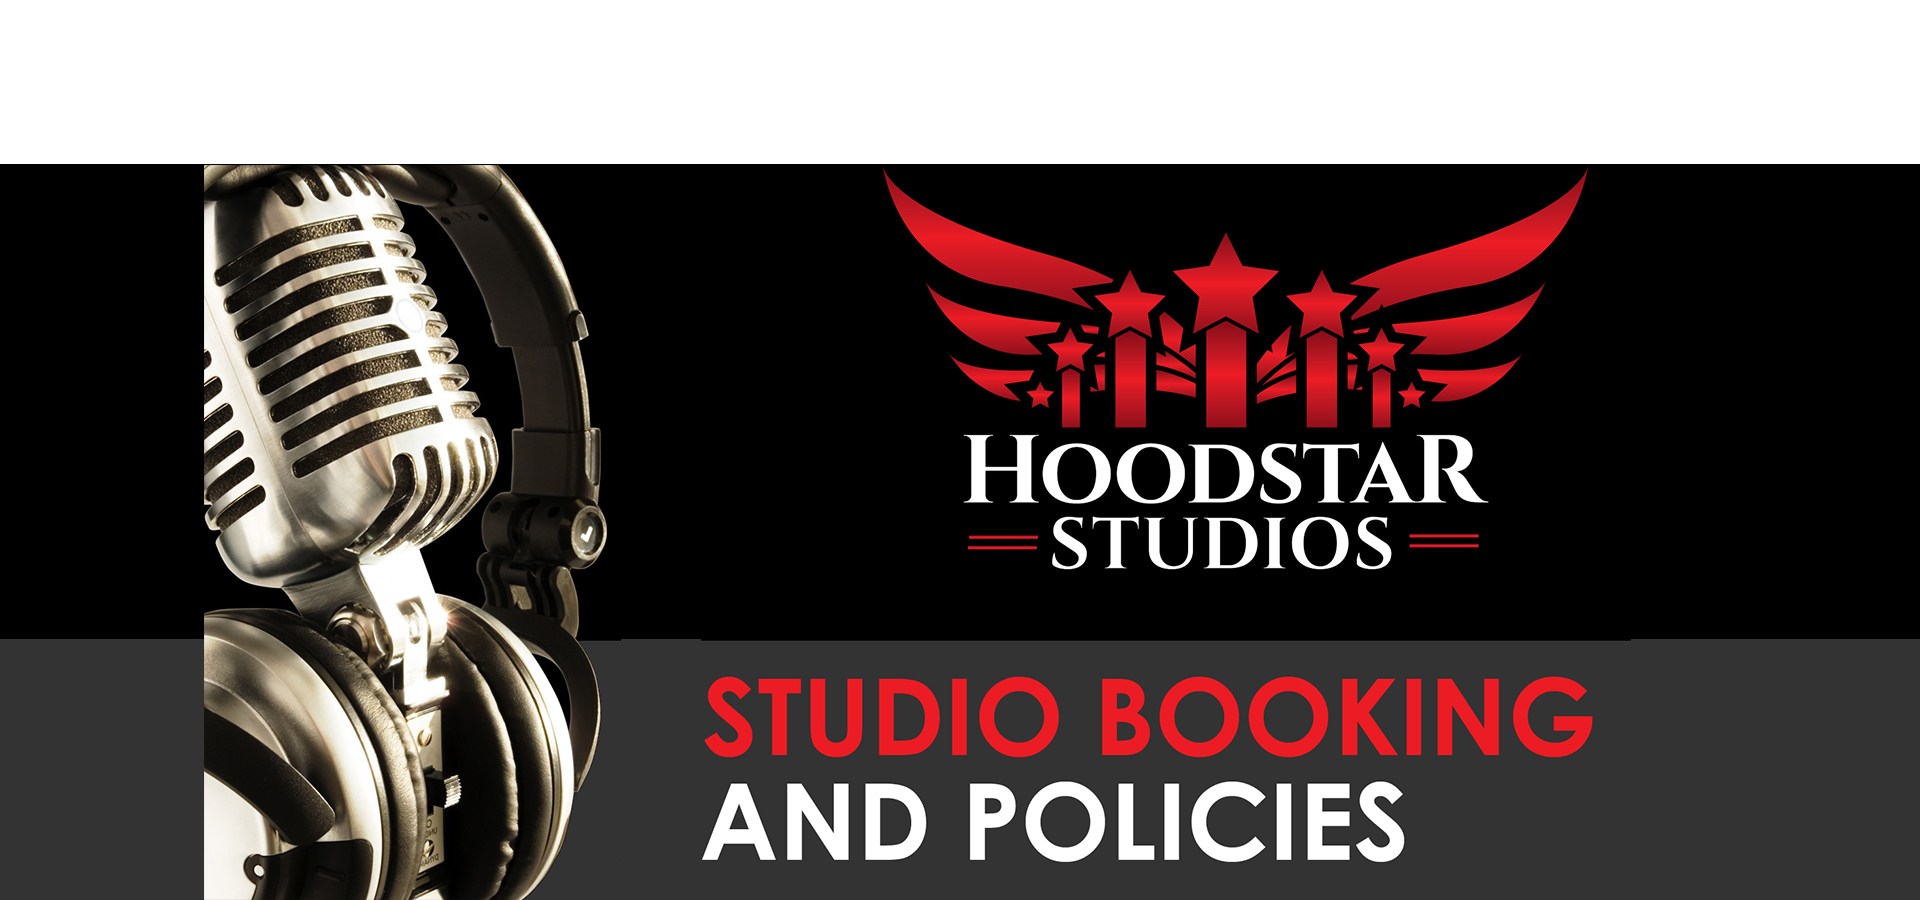 Hoodstar Studios Booking2